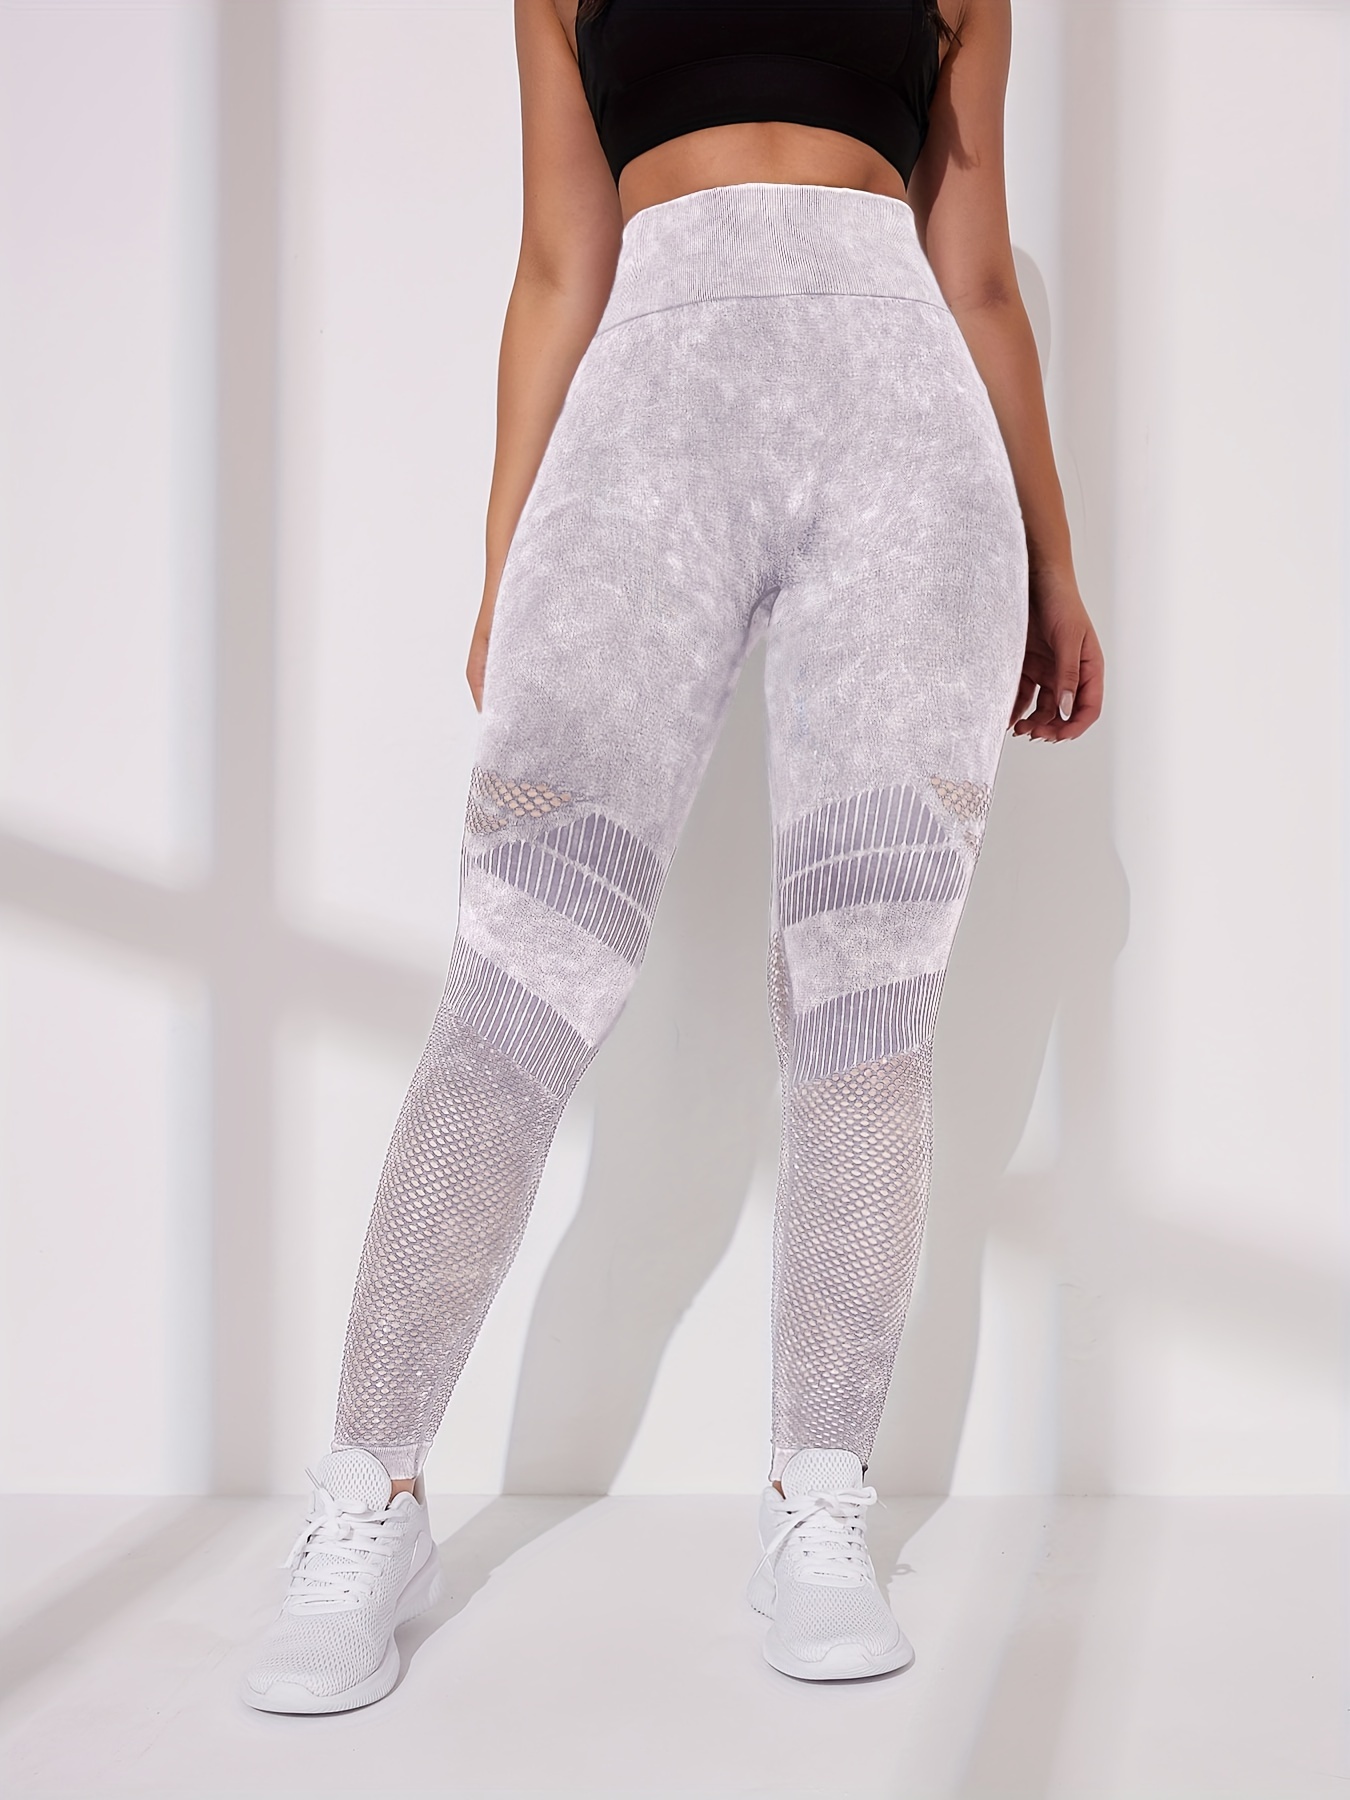 Venu Ladies Yoga Track Pants Stretchable Gym Tights – The Venu Sports Shop